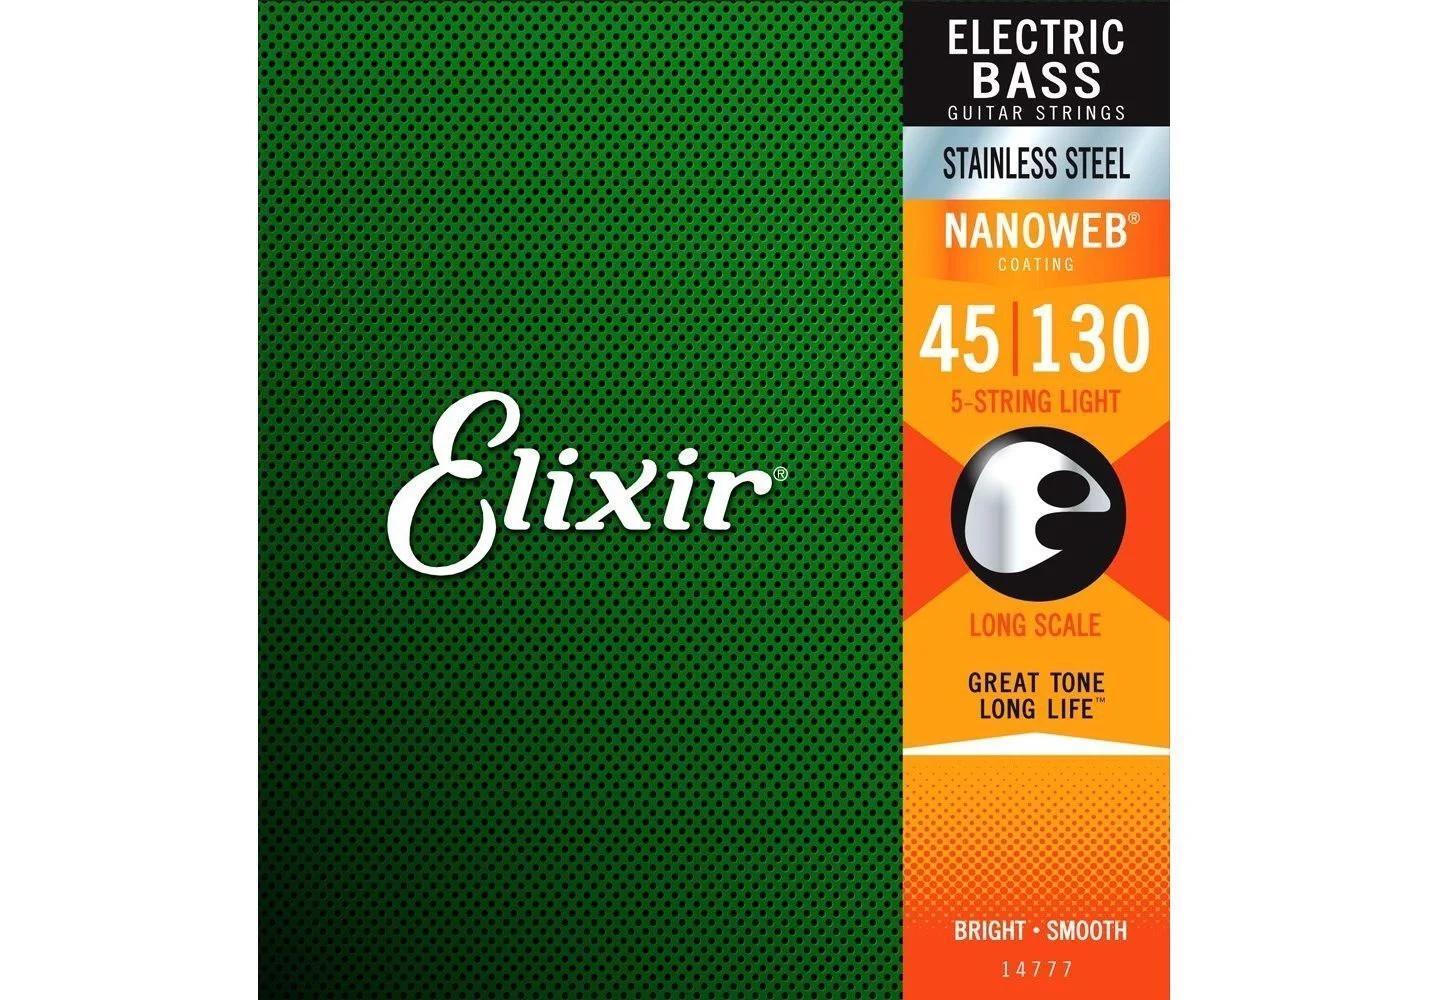 Dây đàn guitar Elixir 14777